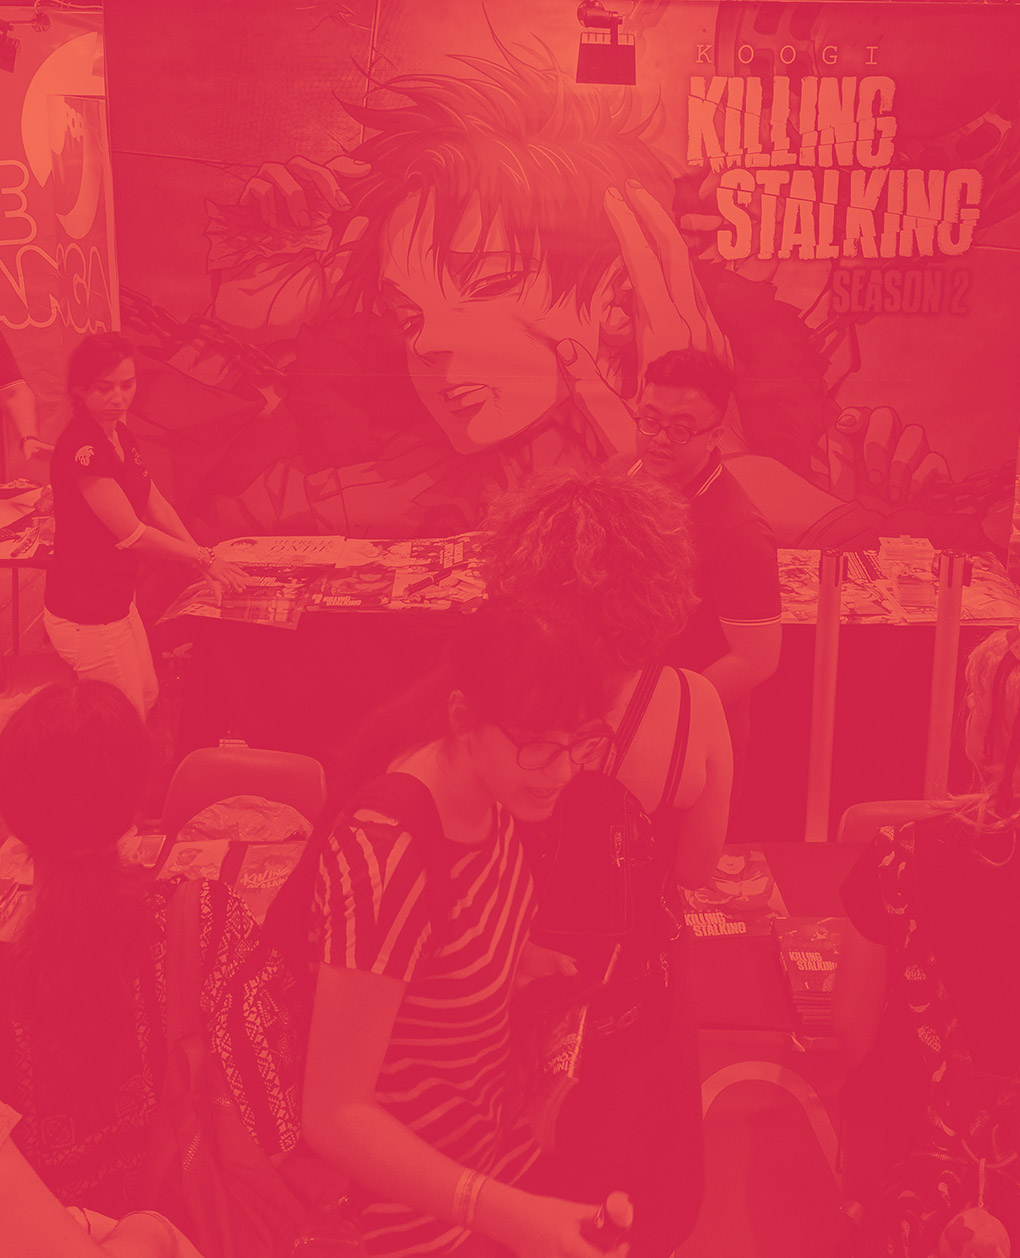 Killing Stalking 1 (킬링 스토킹 1권) by Koogi